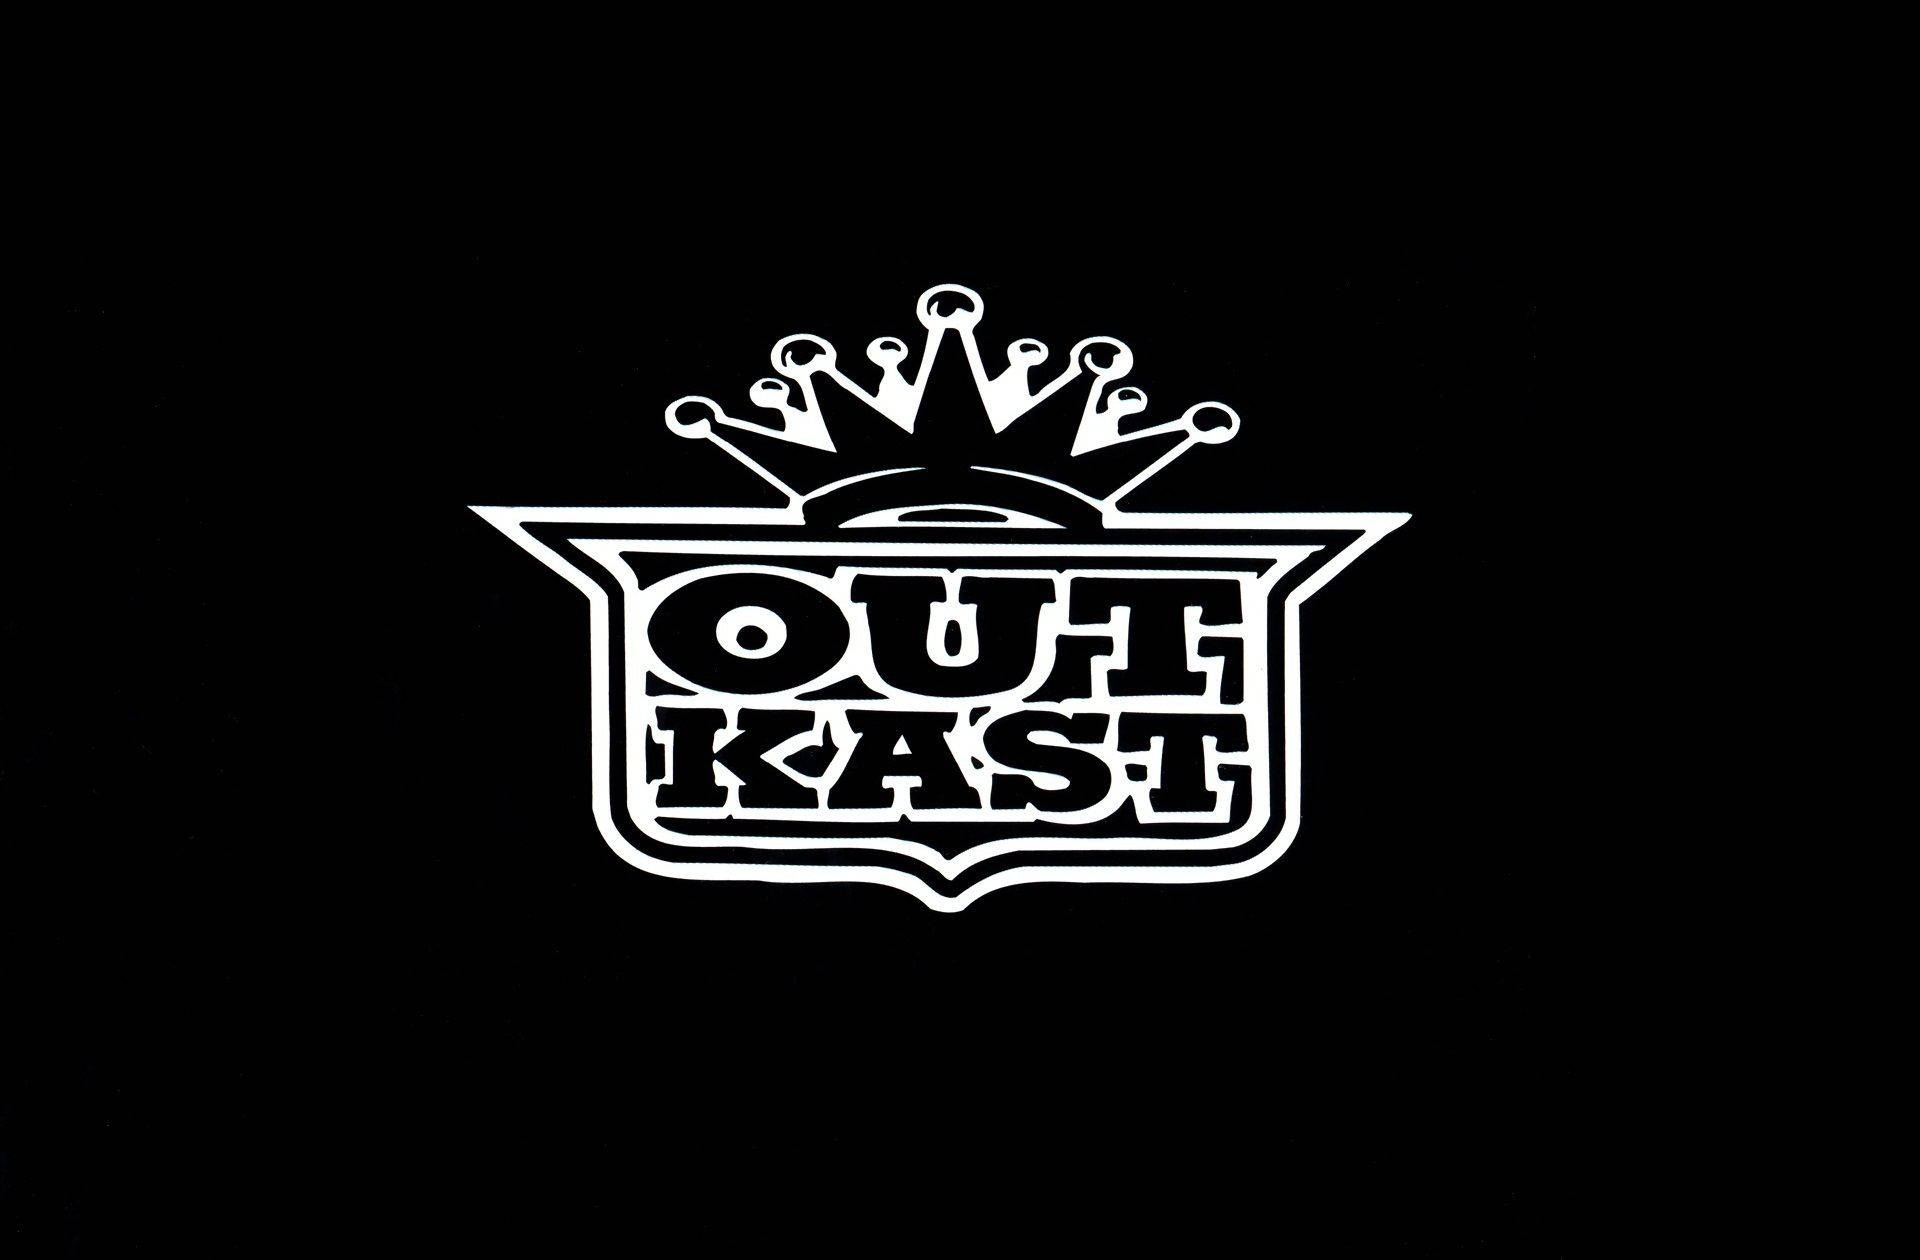 Outkast Logo Design Digital Art Wallpaper